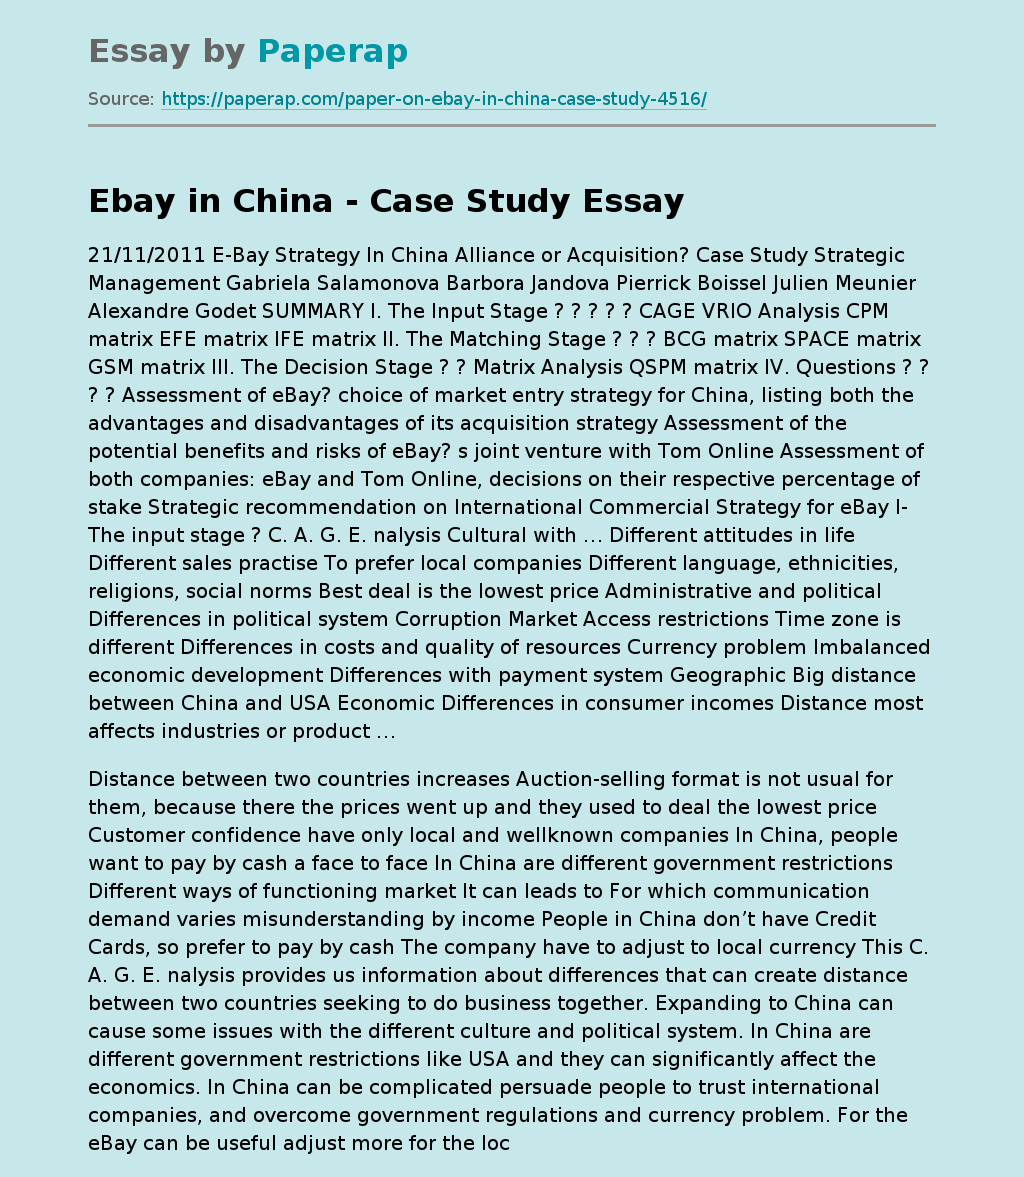 Ebay in China - Case Study